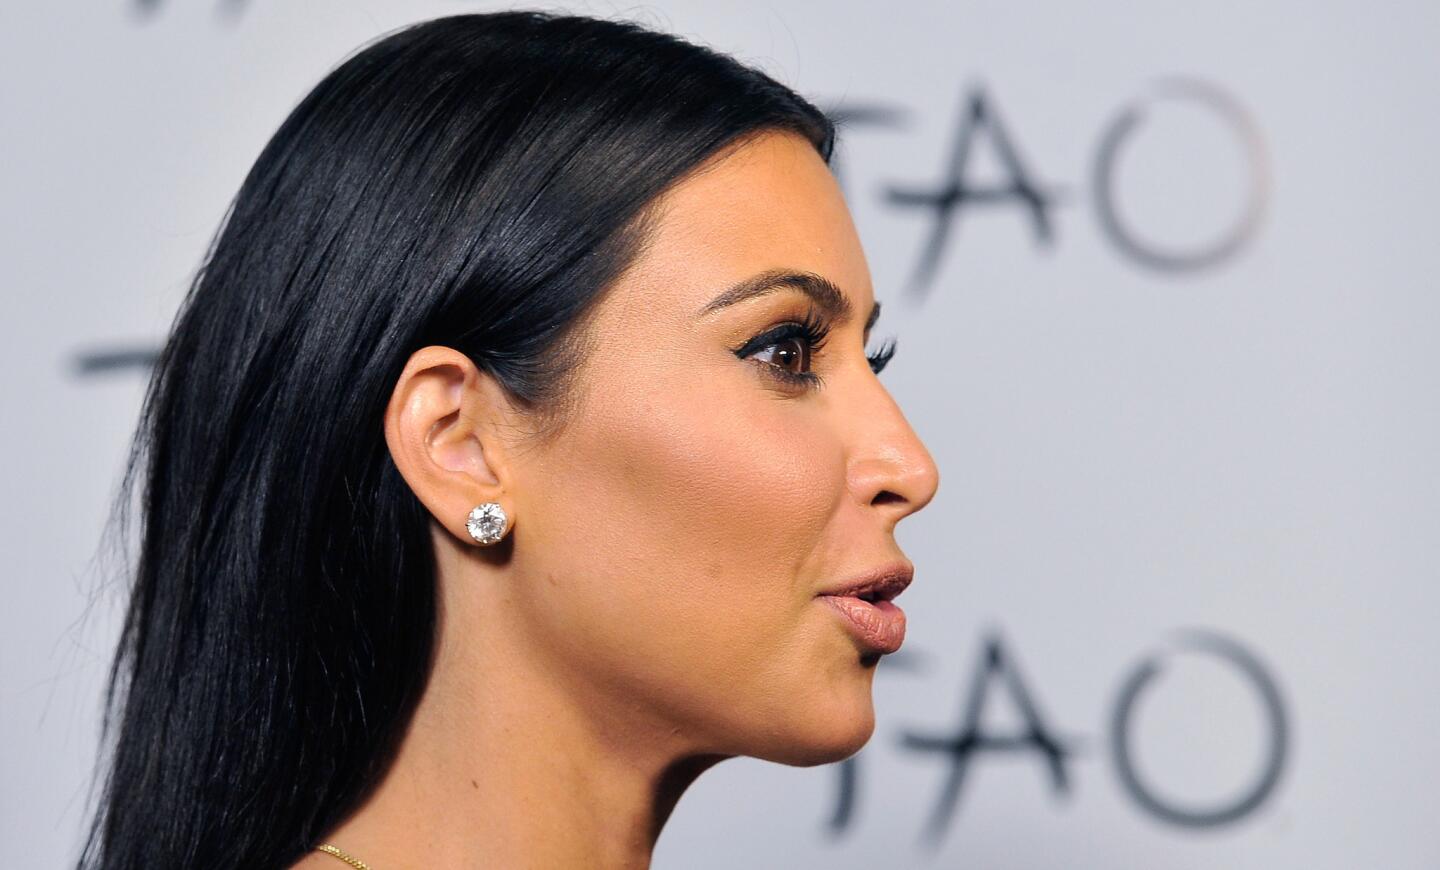 Kim Kardashian's recent hairstyles